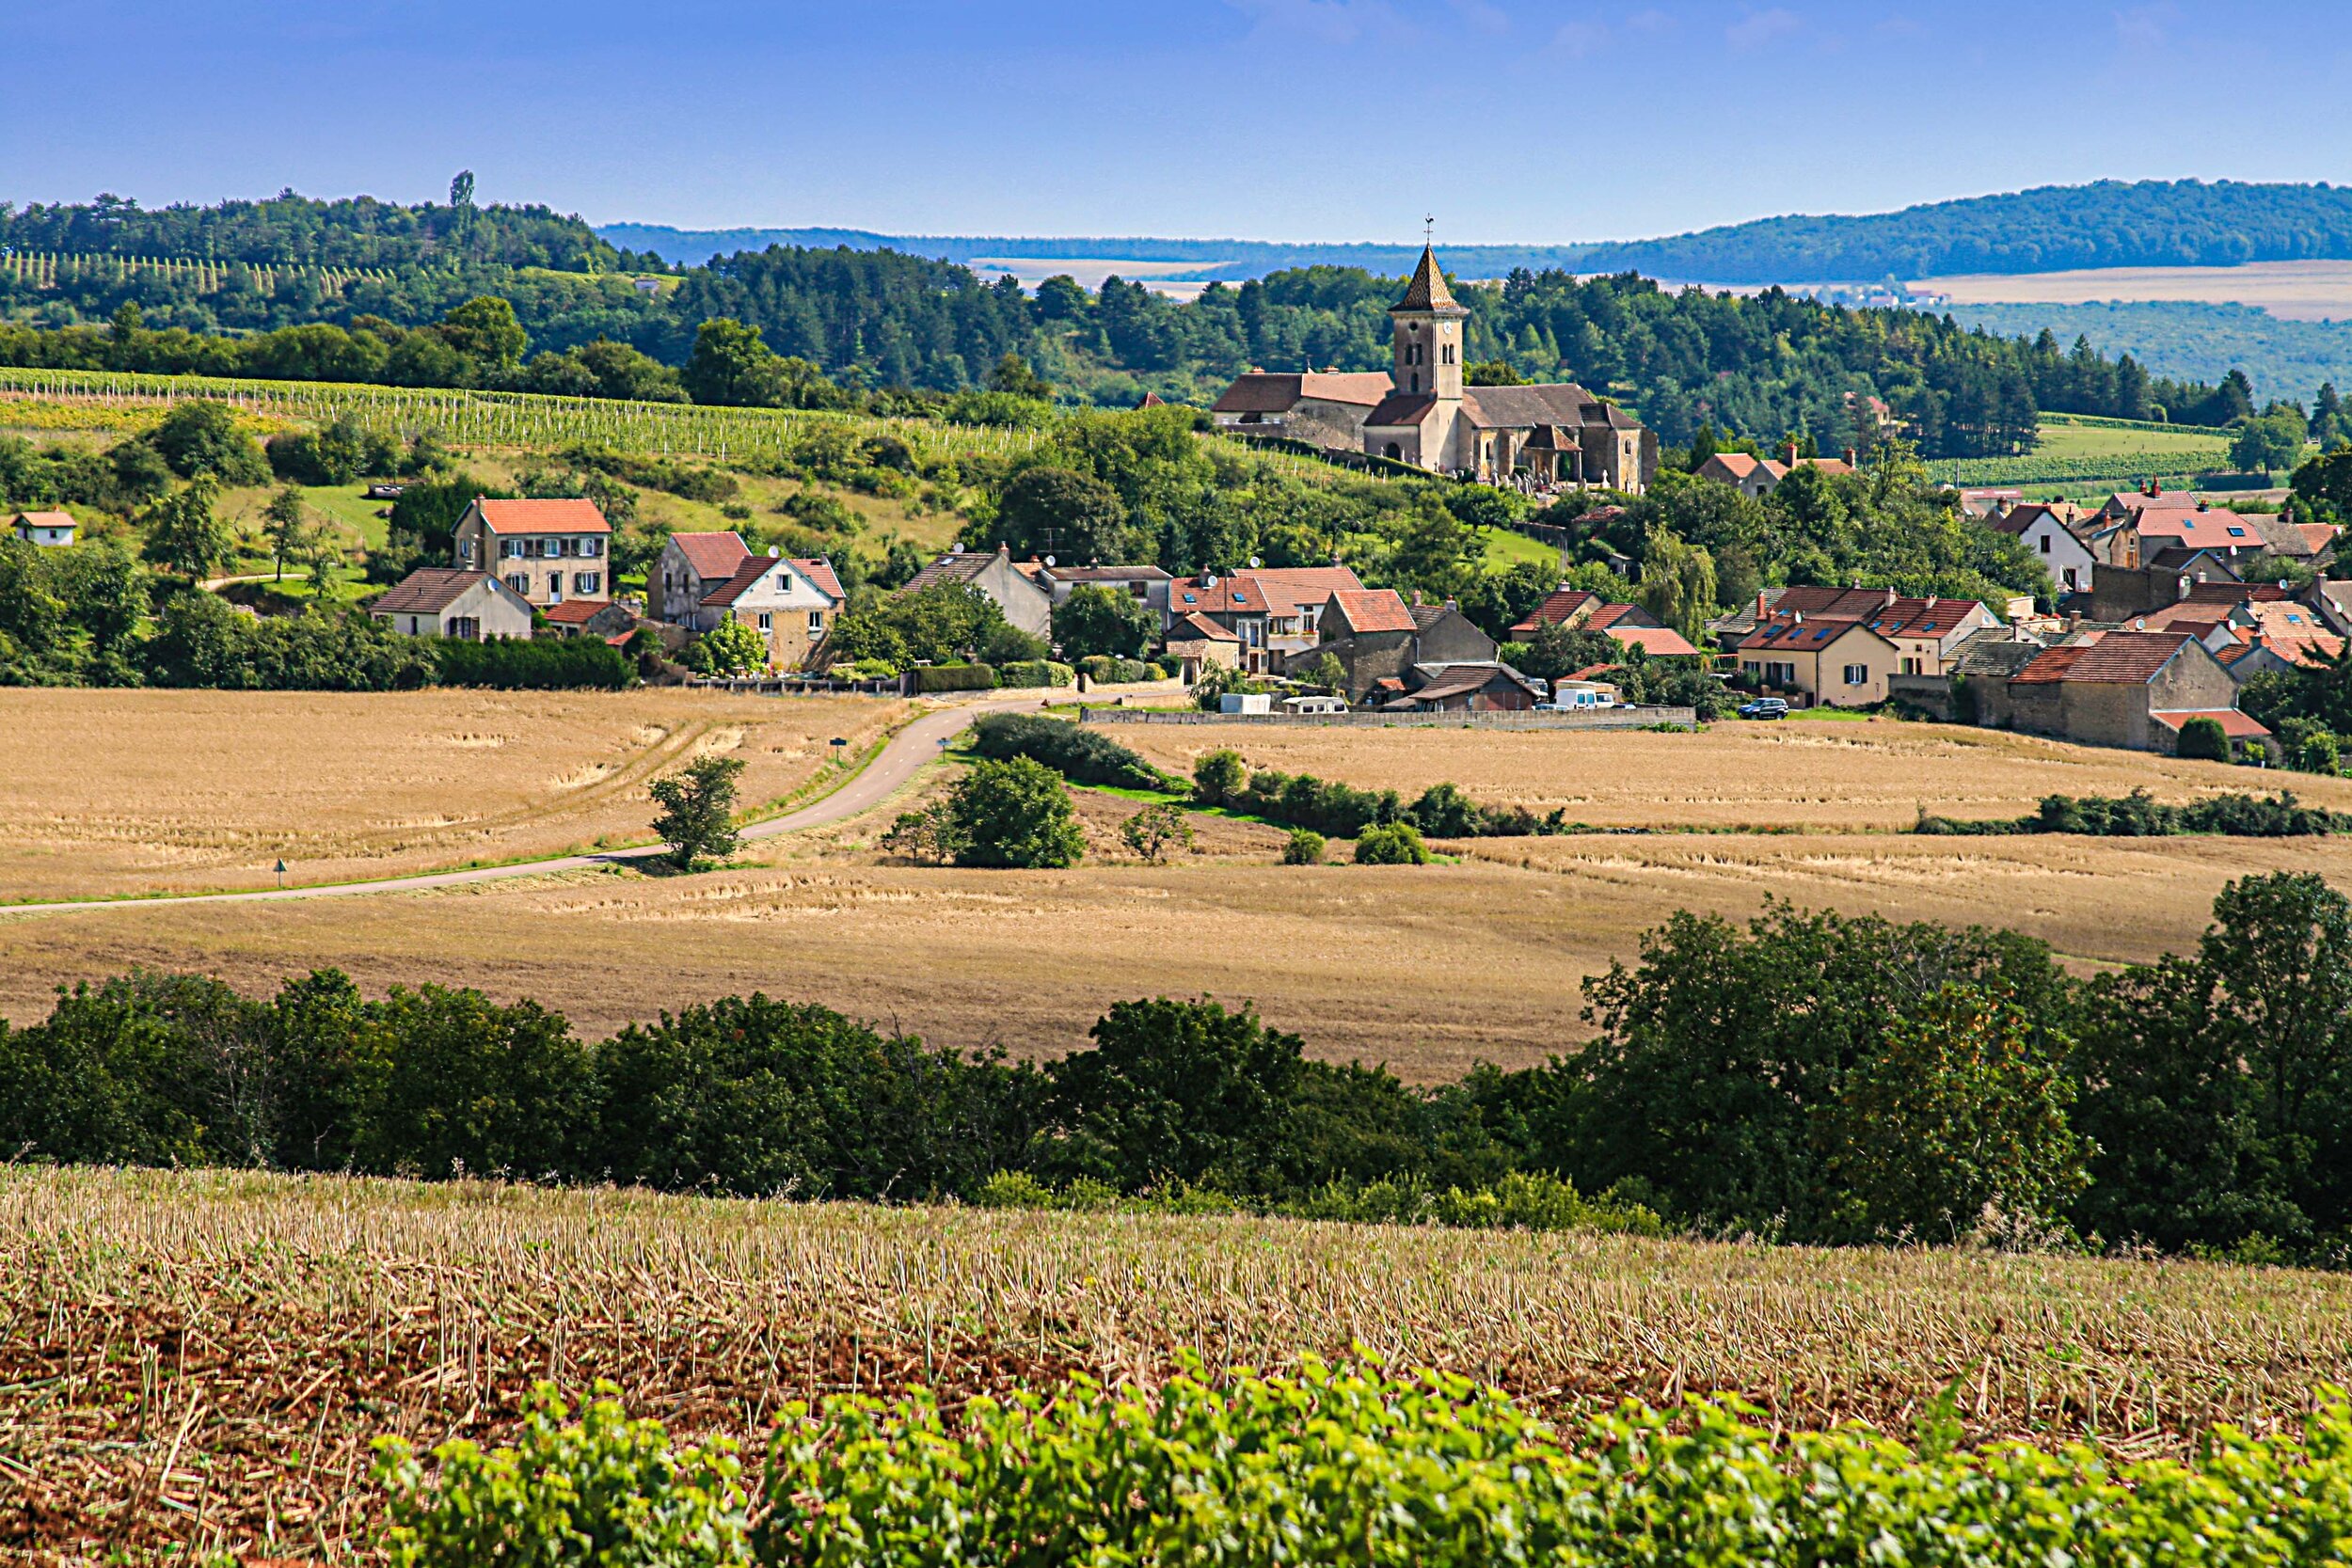  Burgundy region, France 